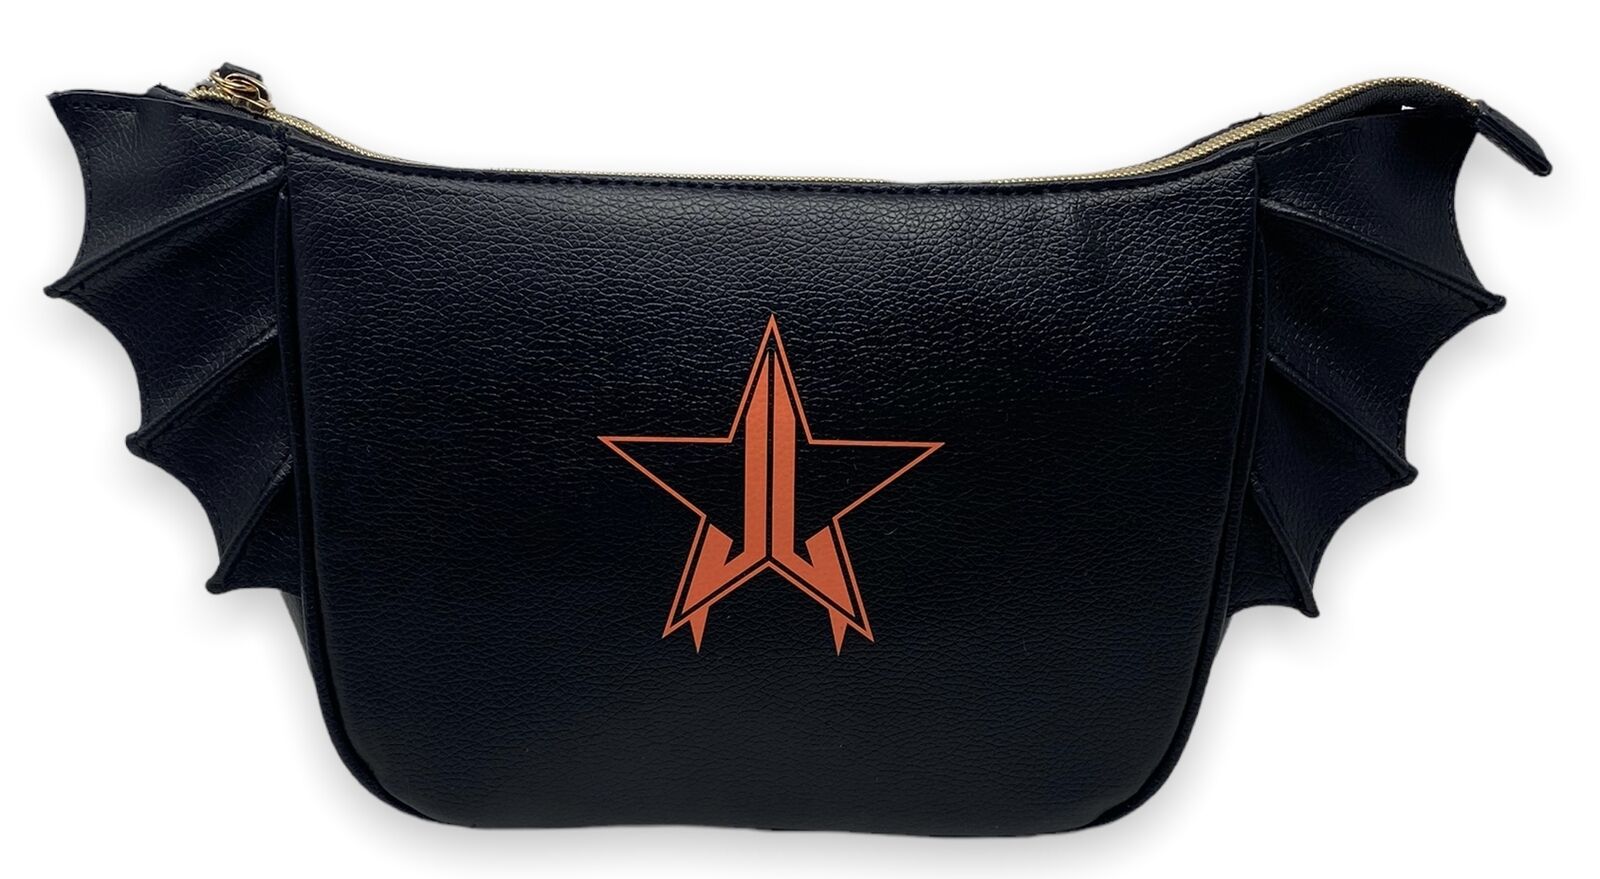 Jeffree Star Cosmetics Exclusive Faux Leather Halloween Bat Makeup Bag in Black